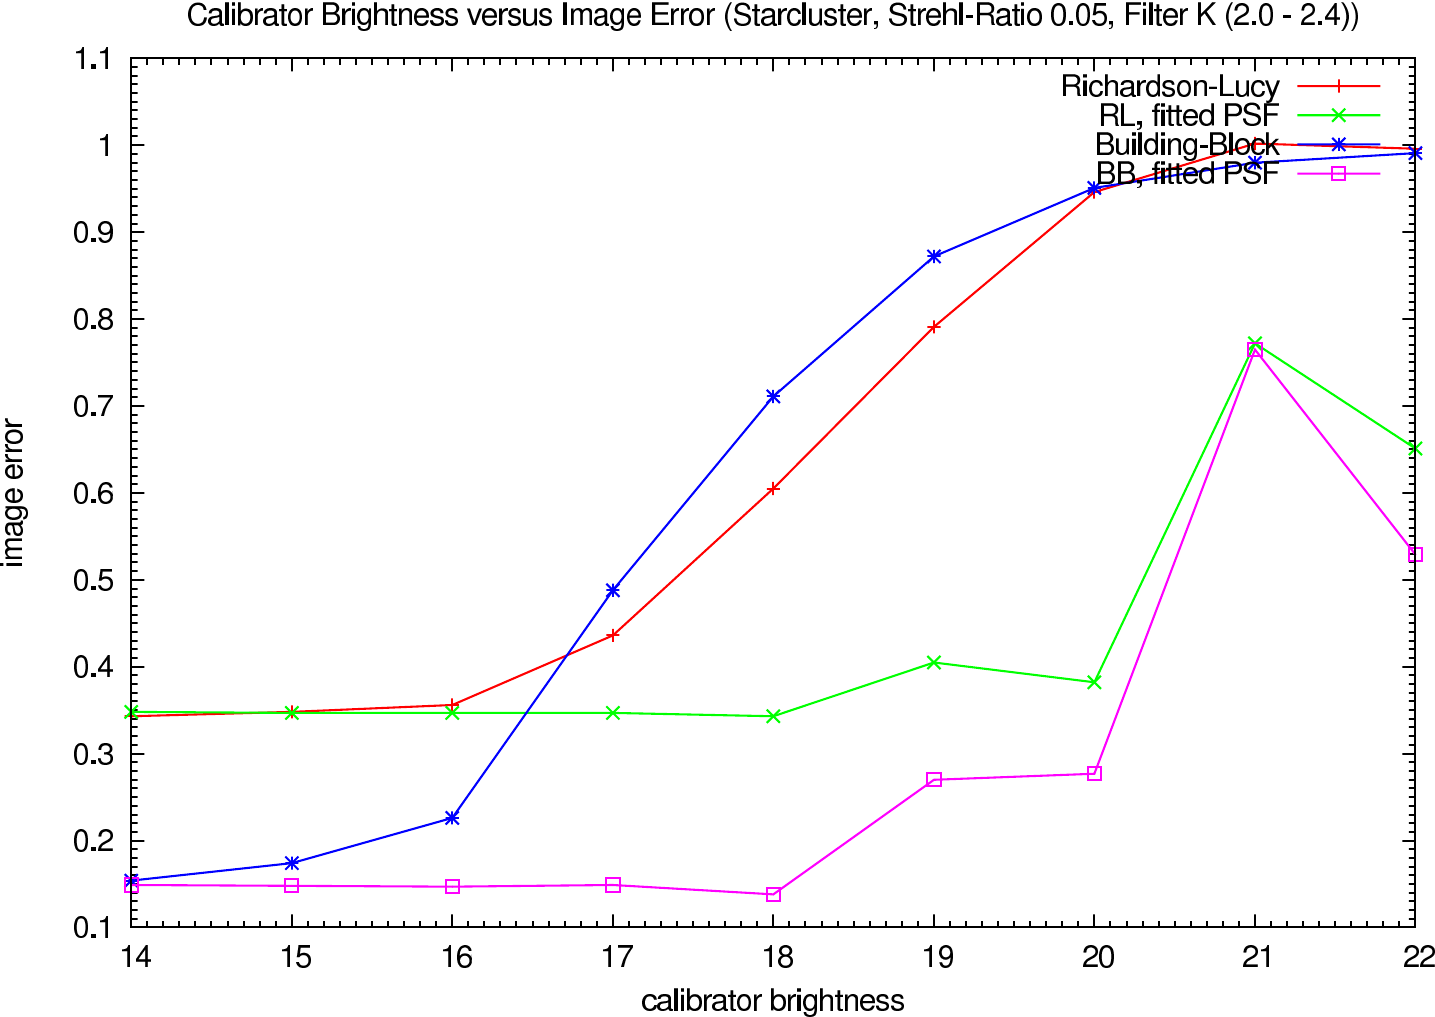 Image errors depending on the calibrator brightness, strehl ratio 0.05, K-Band